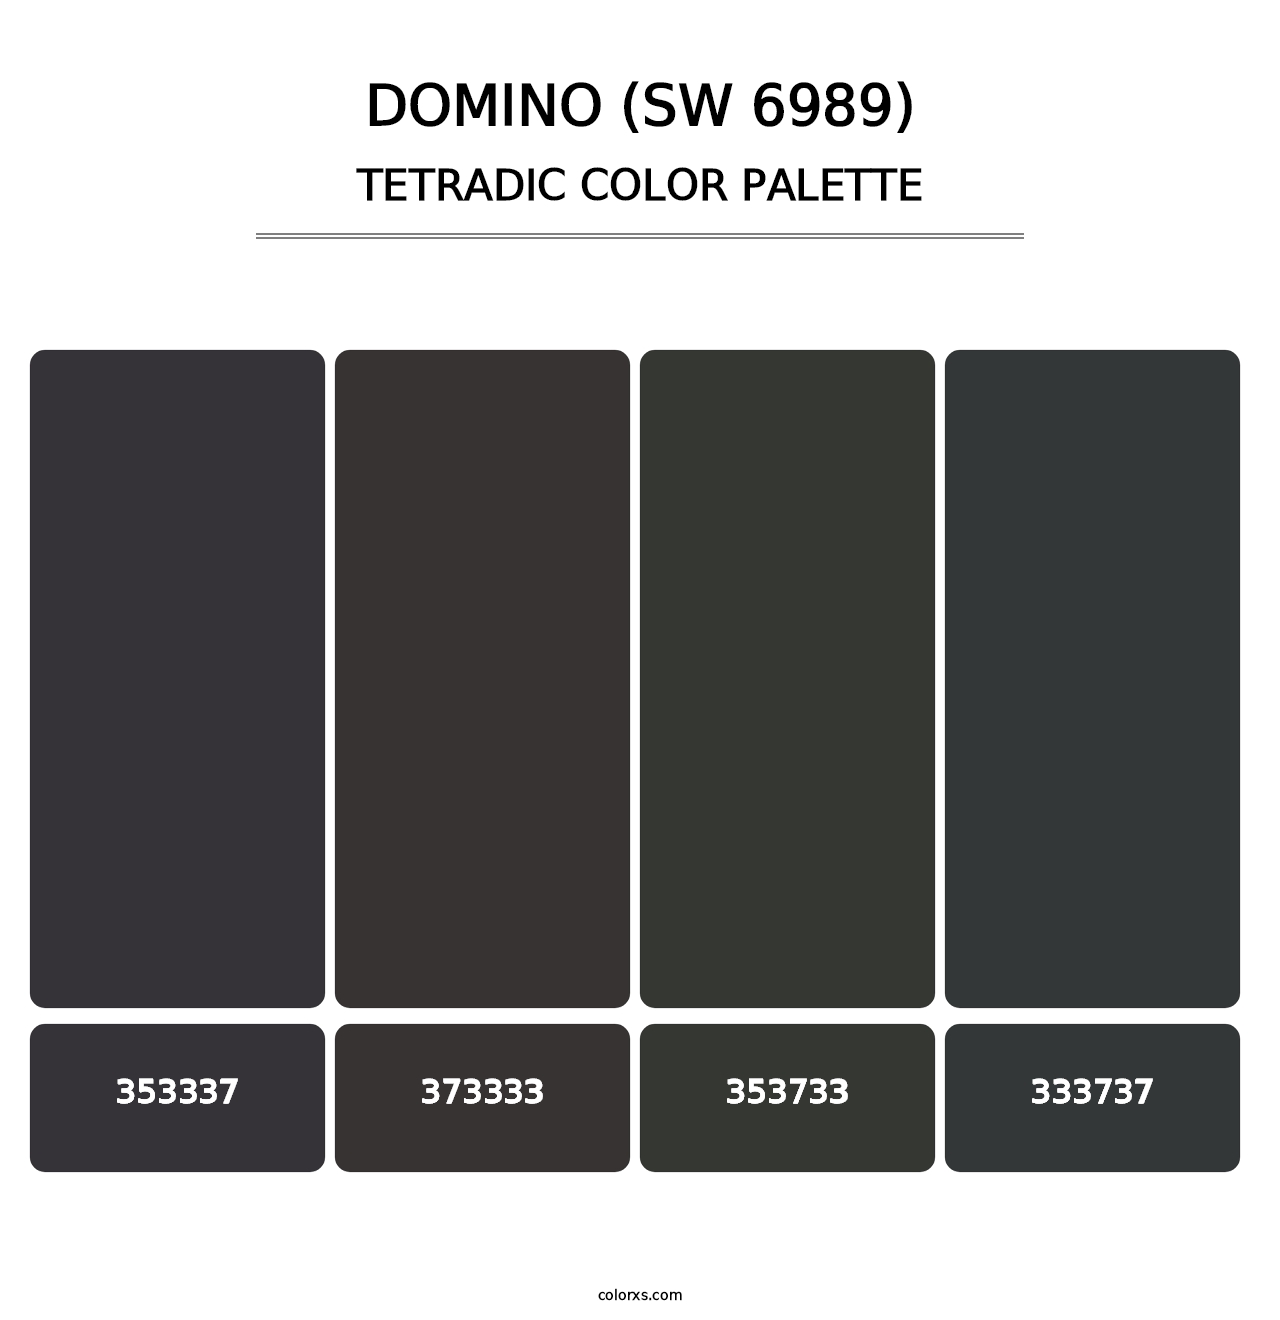 Domino (SW 6989) - Tetradic Color Palette